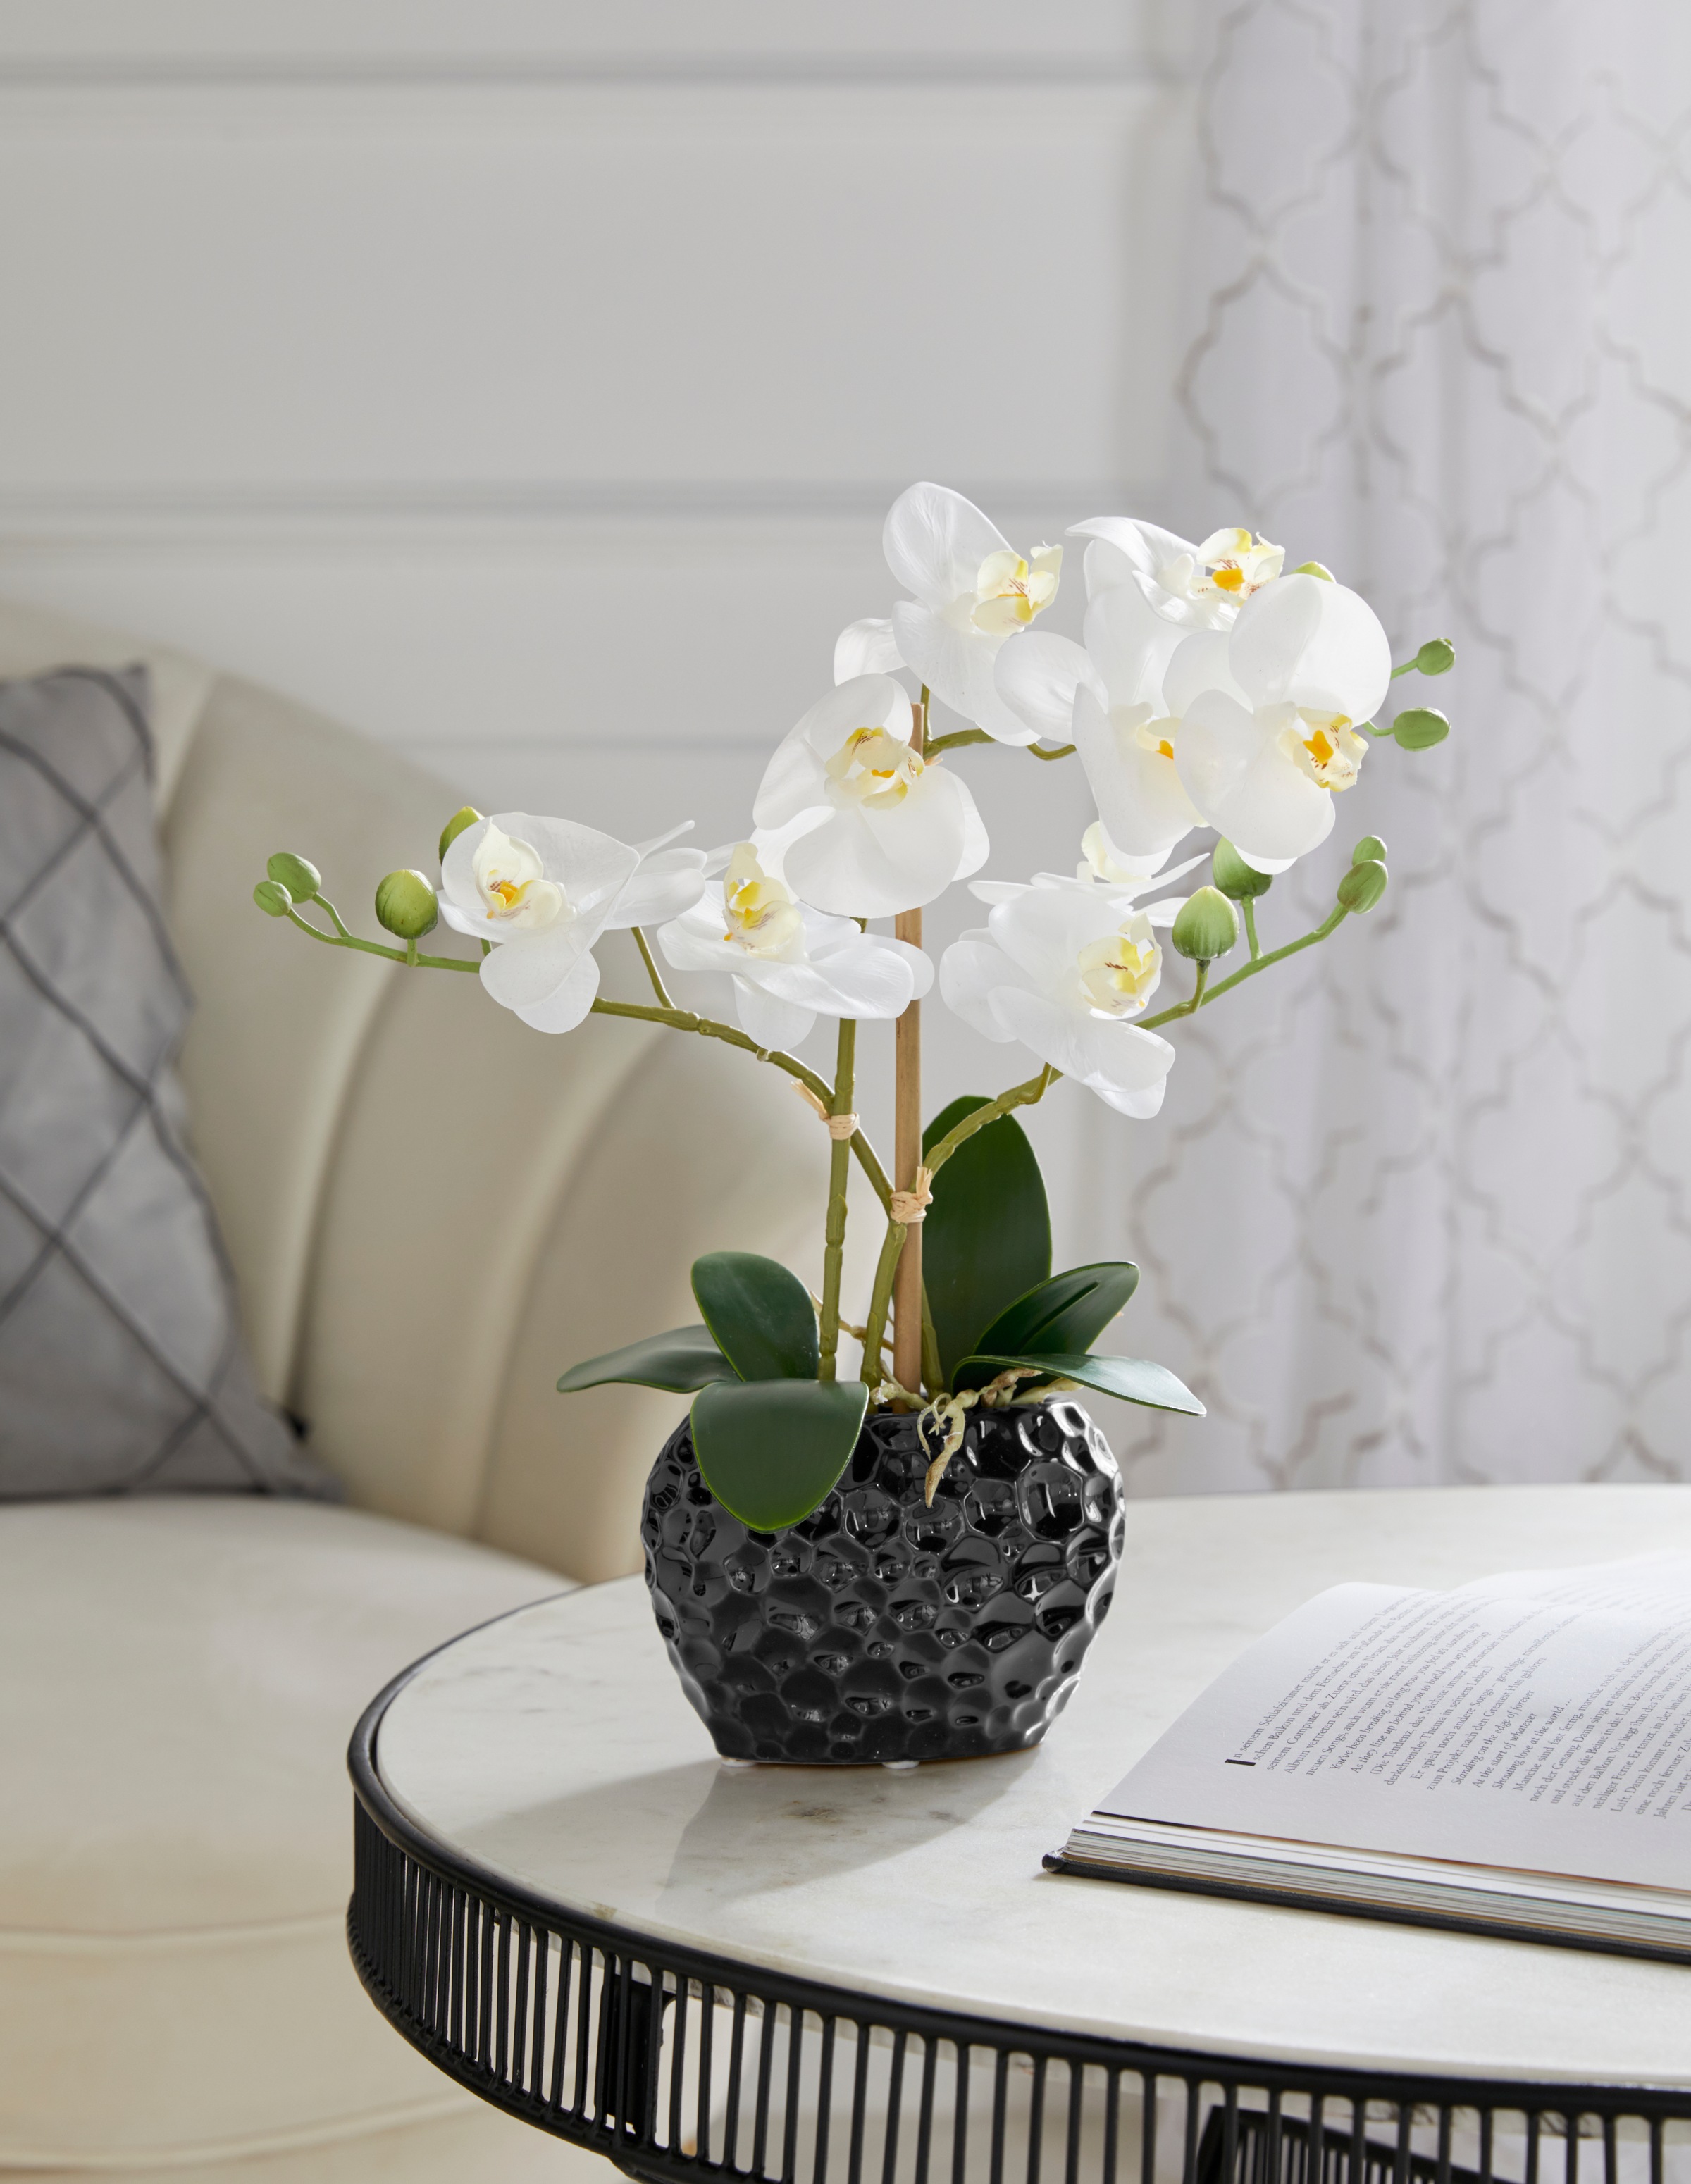 Leonique Kunstpflanze »Orchidee«, Kunstorchidee, im Topf